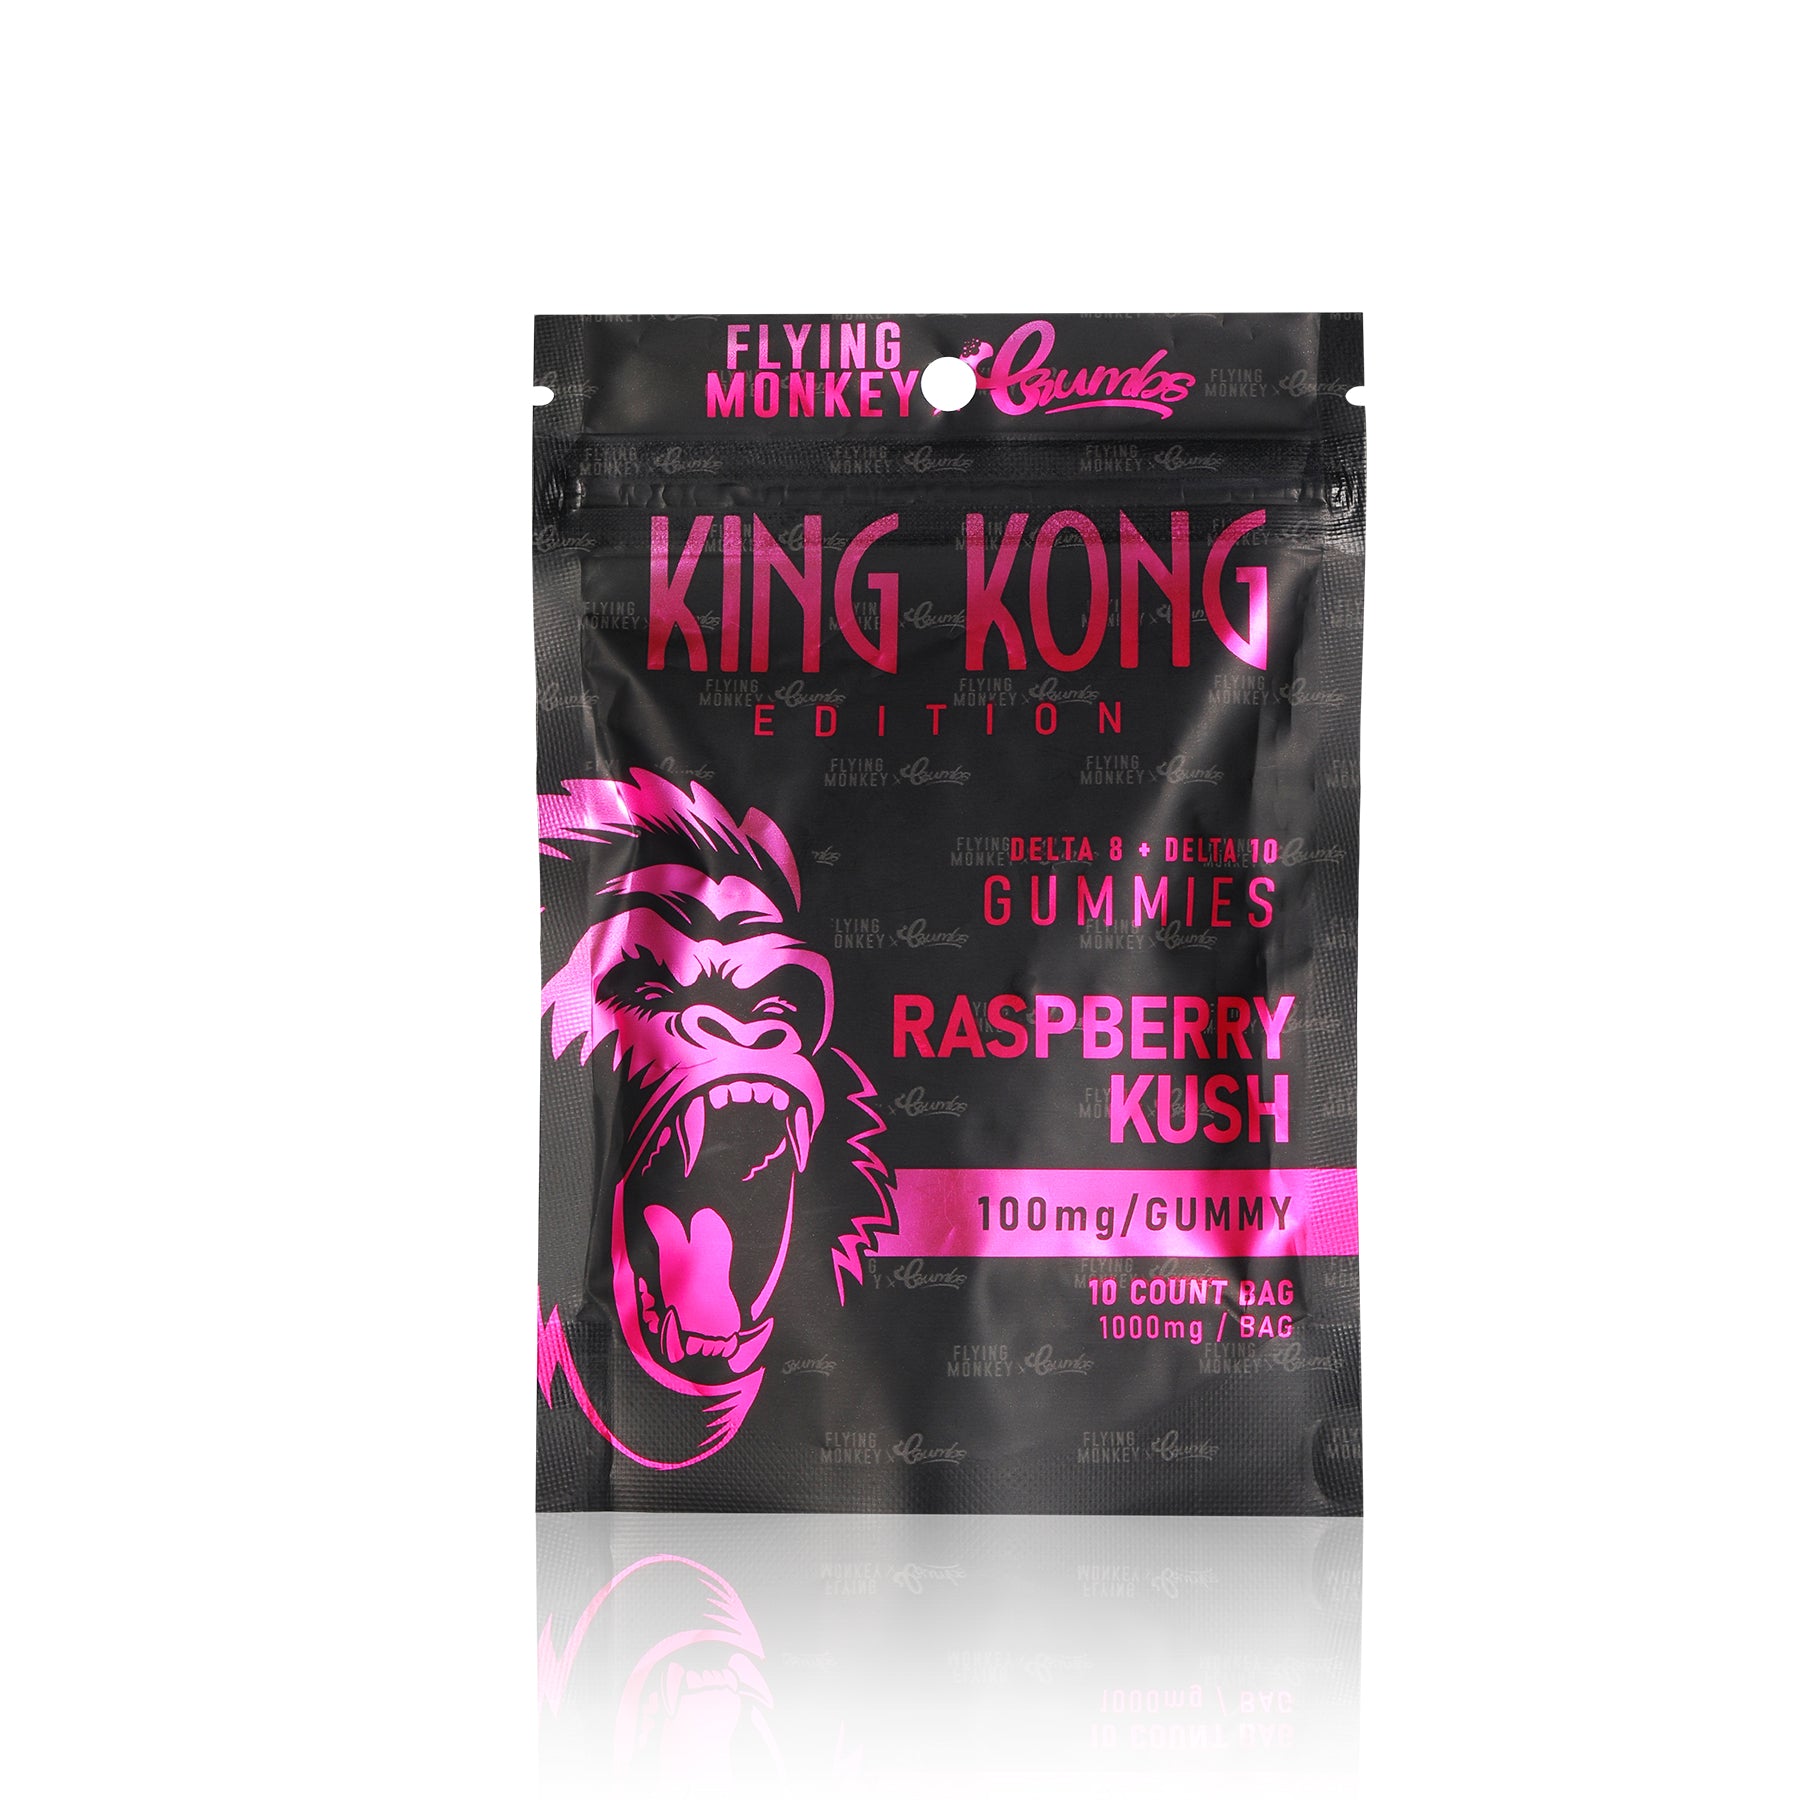 Flying Monkey King Kong 100mg gummy bag in Raspberry Kush flavor